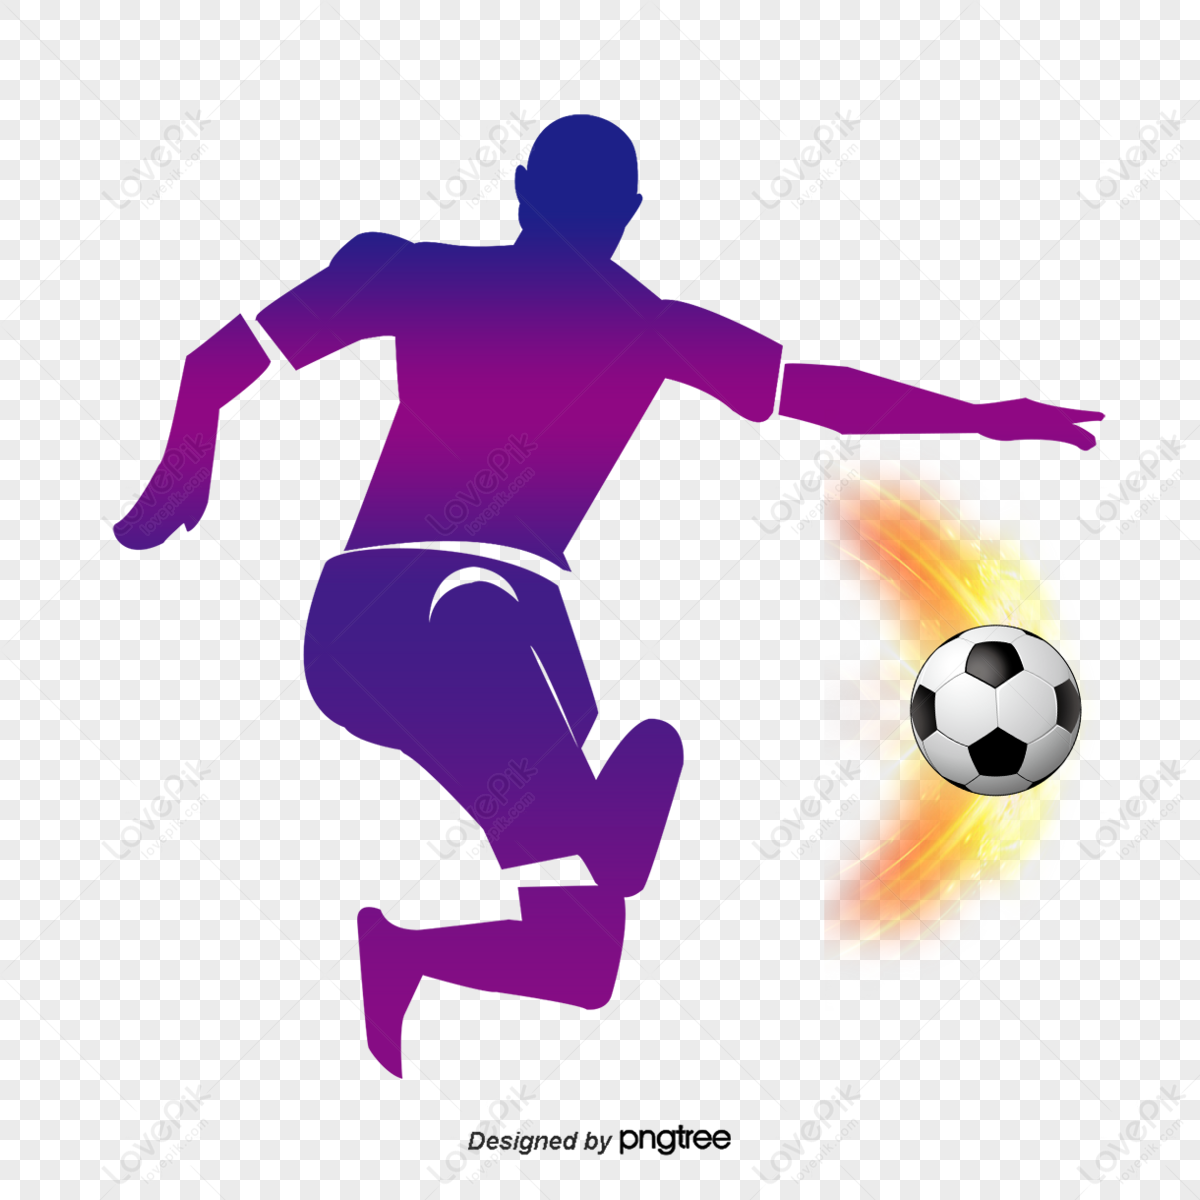 Soccer and football player man logo Royalty Free Vector